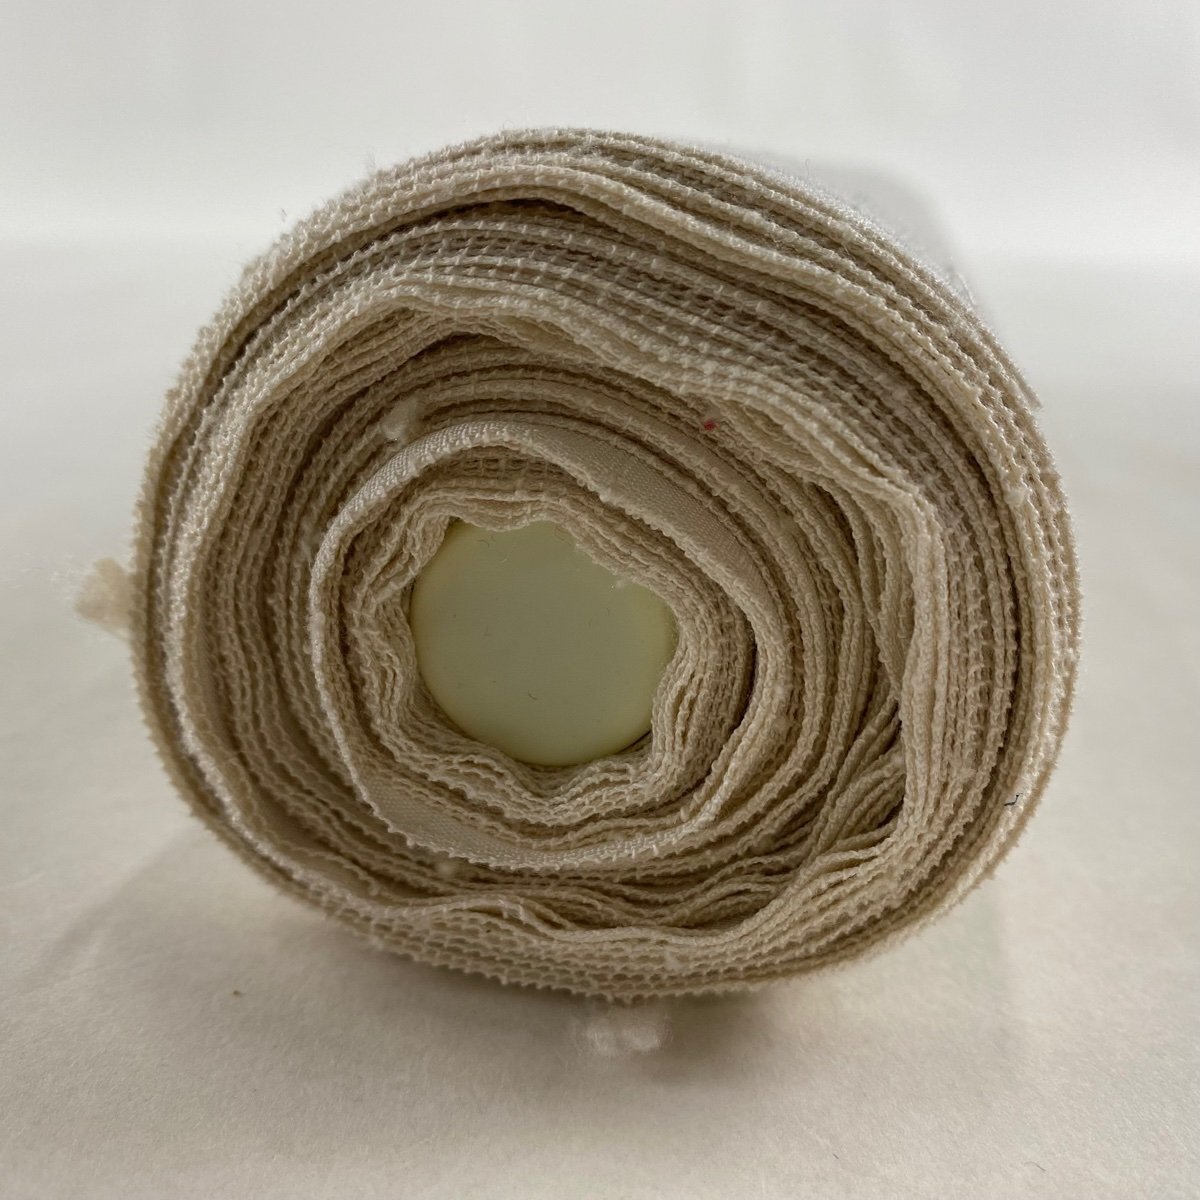  cloth name goods pongee . white silk [ used ]